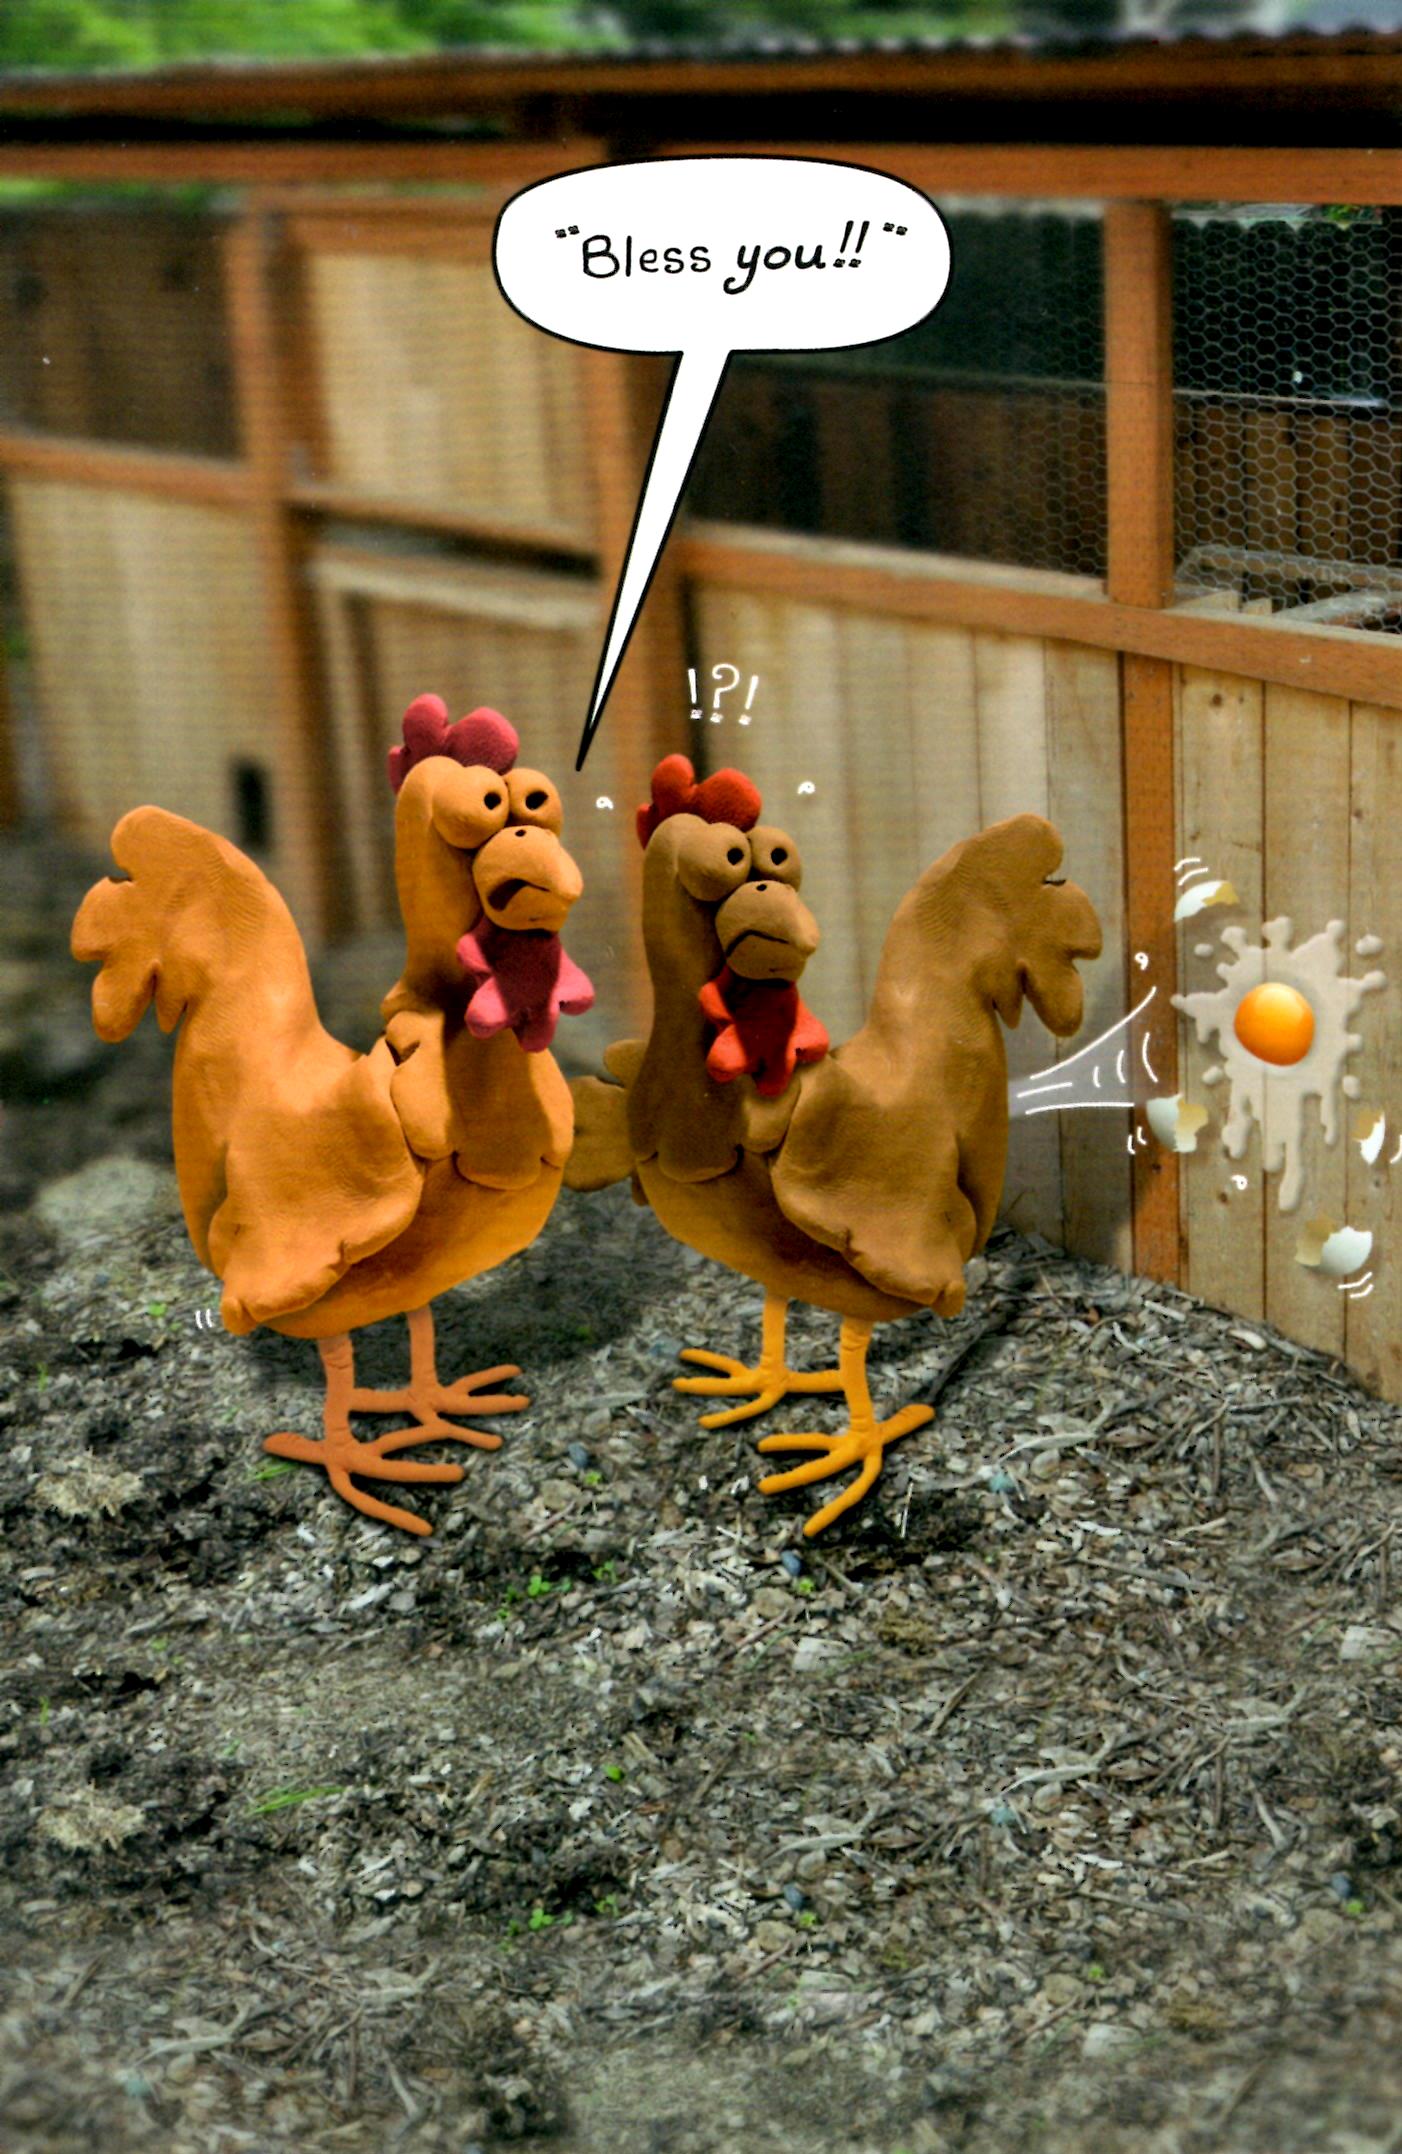 Download 30 Funny Chicken Iphone Wallpaper Gambar Terbaik - Posts.id